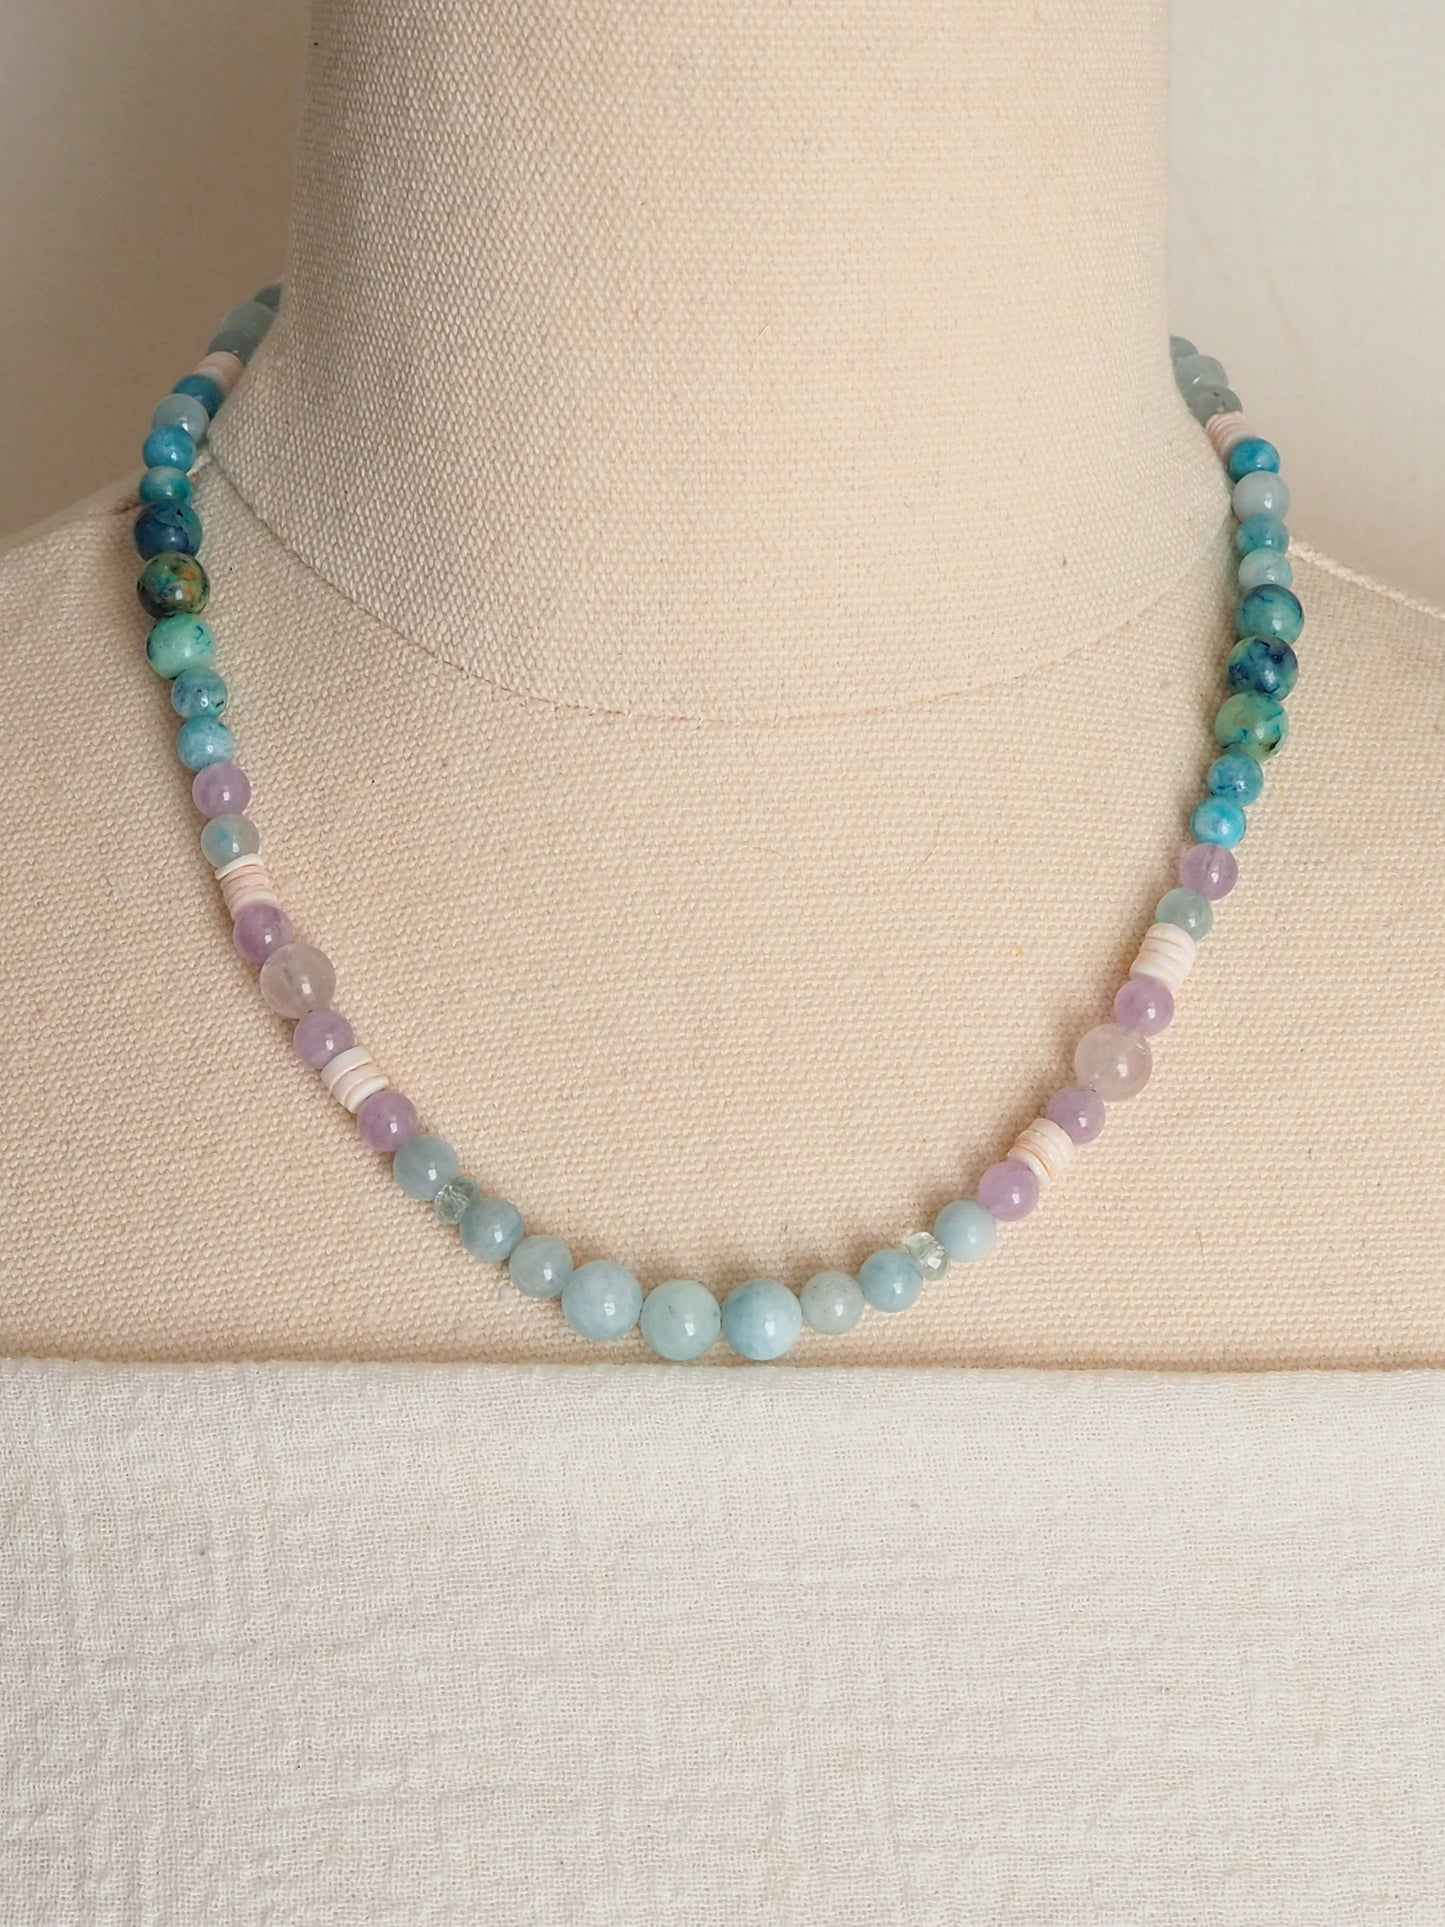 Aquamarine, Lavender Amethyst, Azurite & Chrysocolla in Quartz & Hemimorphite Hand Beaded Necklace